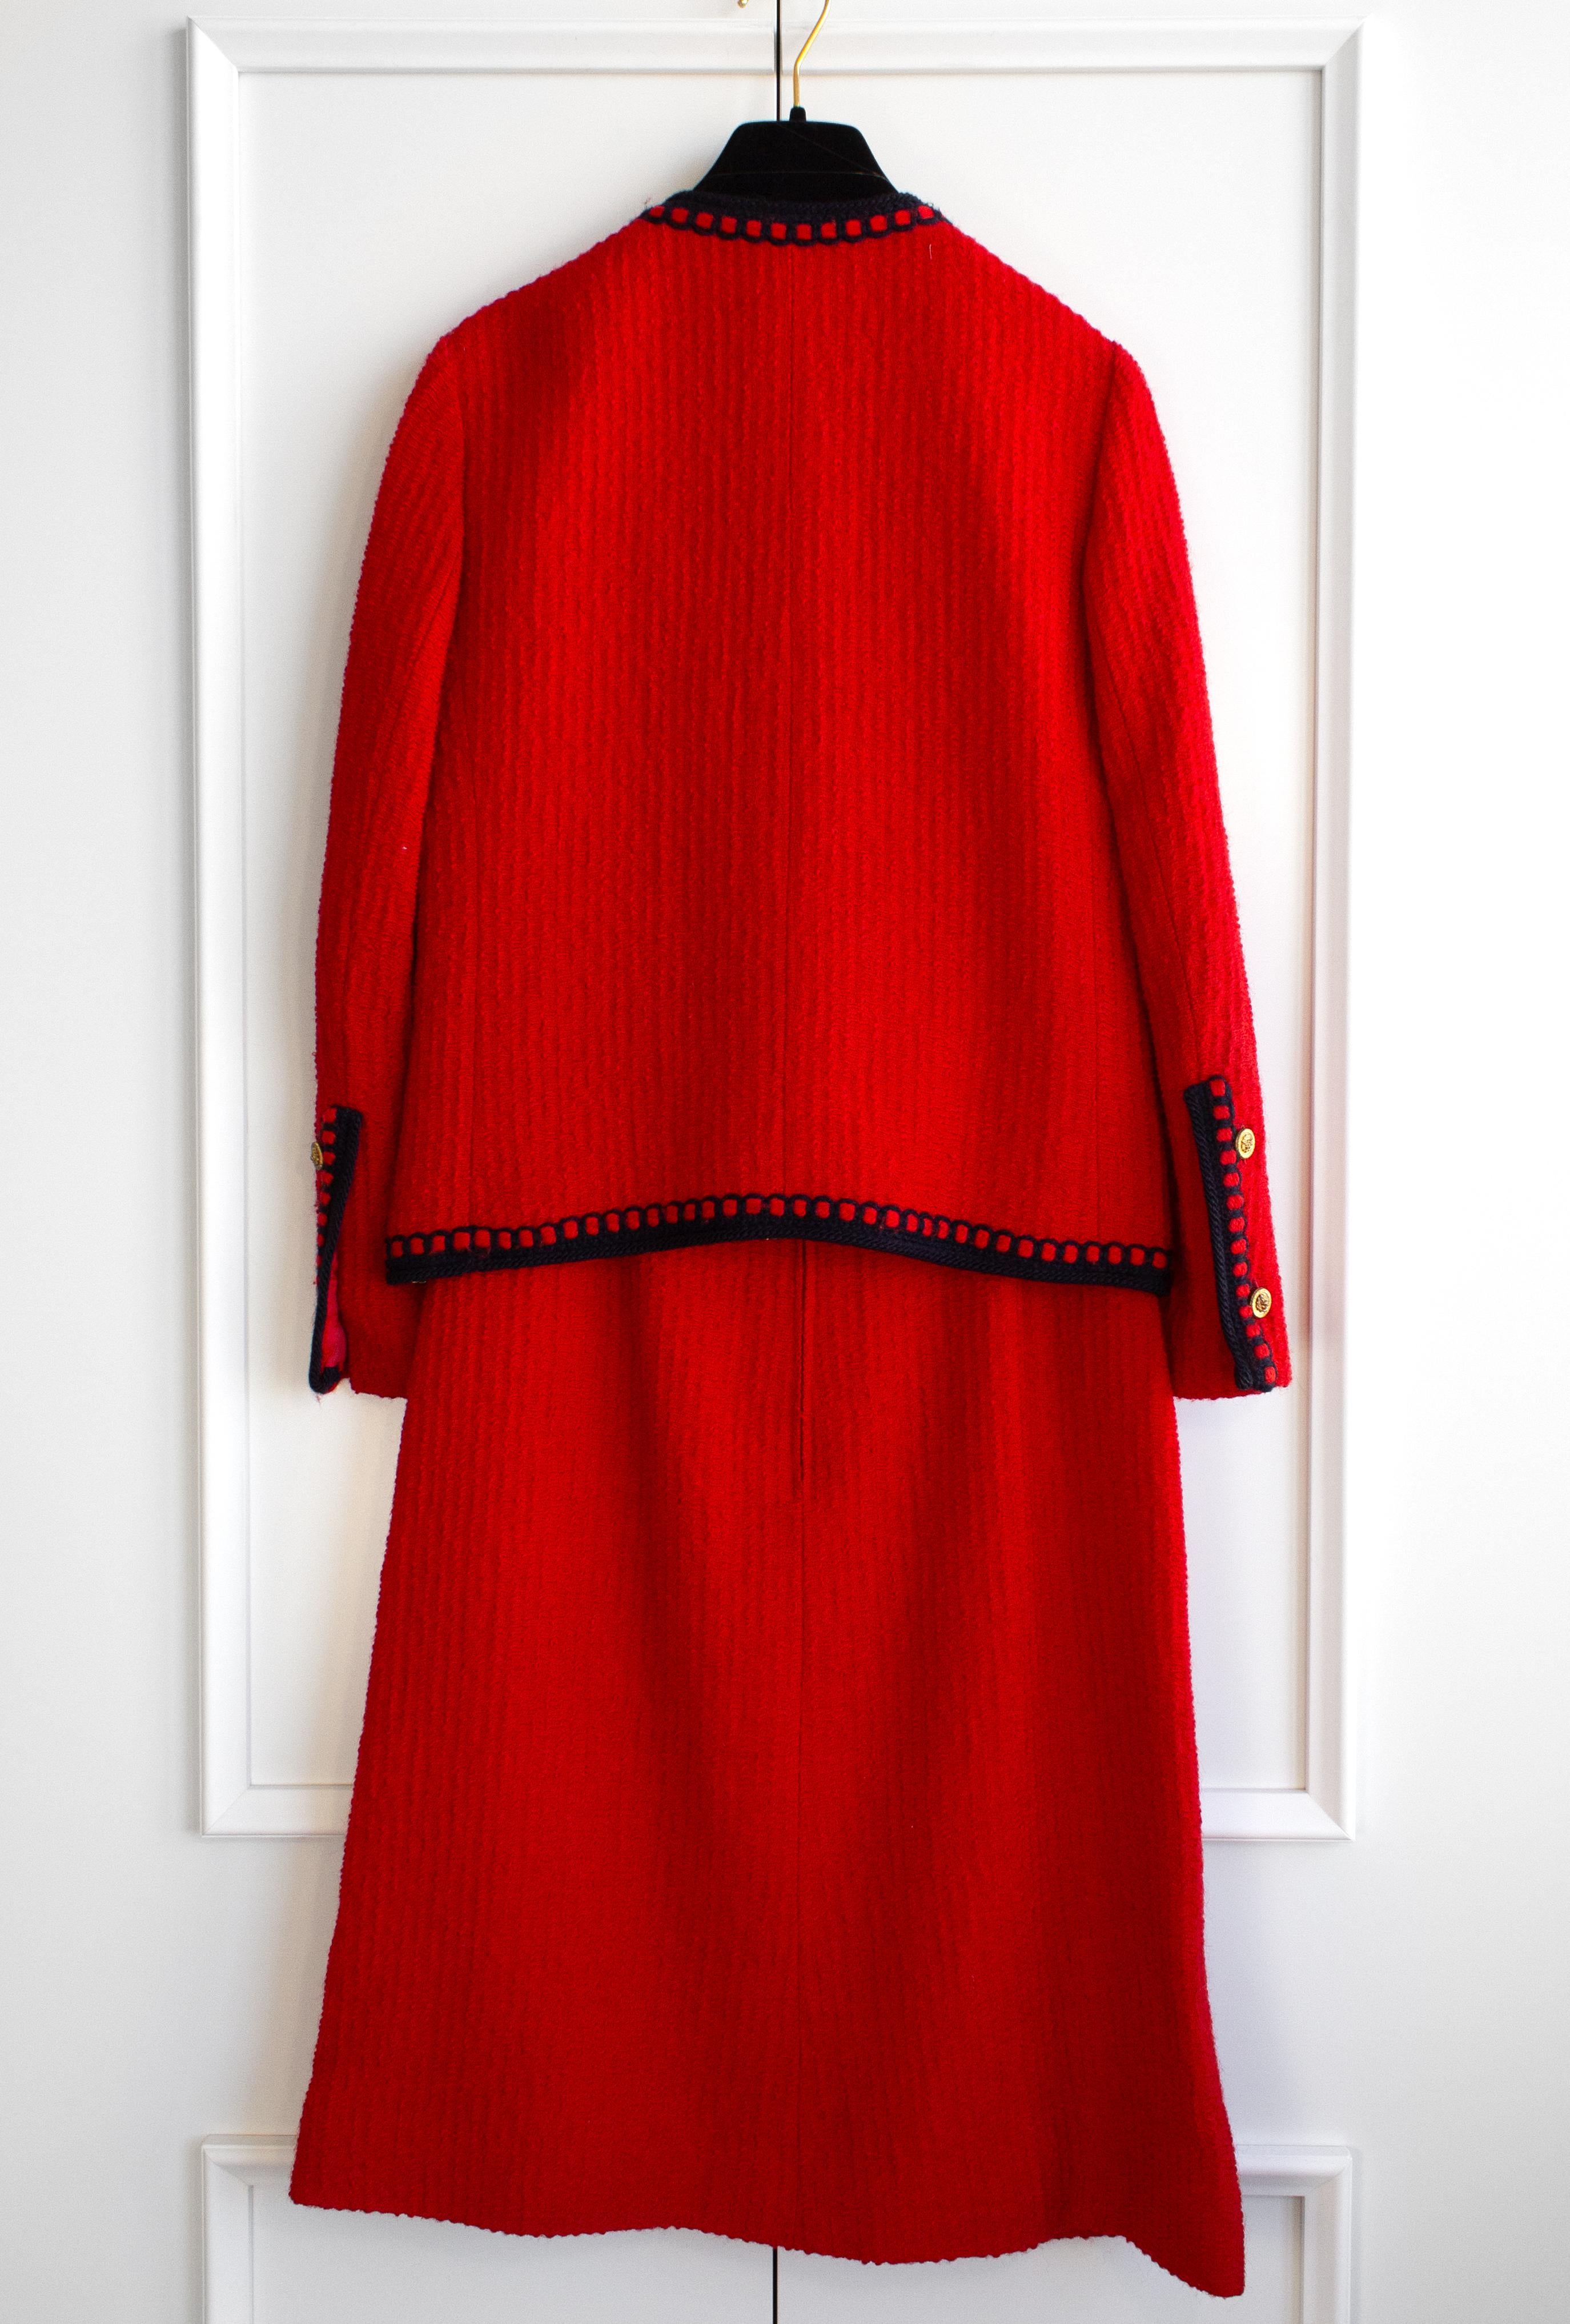 Women's Chanel Vintage 1981 Parisian Red Gold Lion Tweed Jacket Skirt Suit For Sale